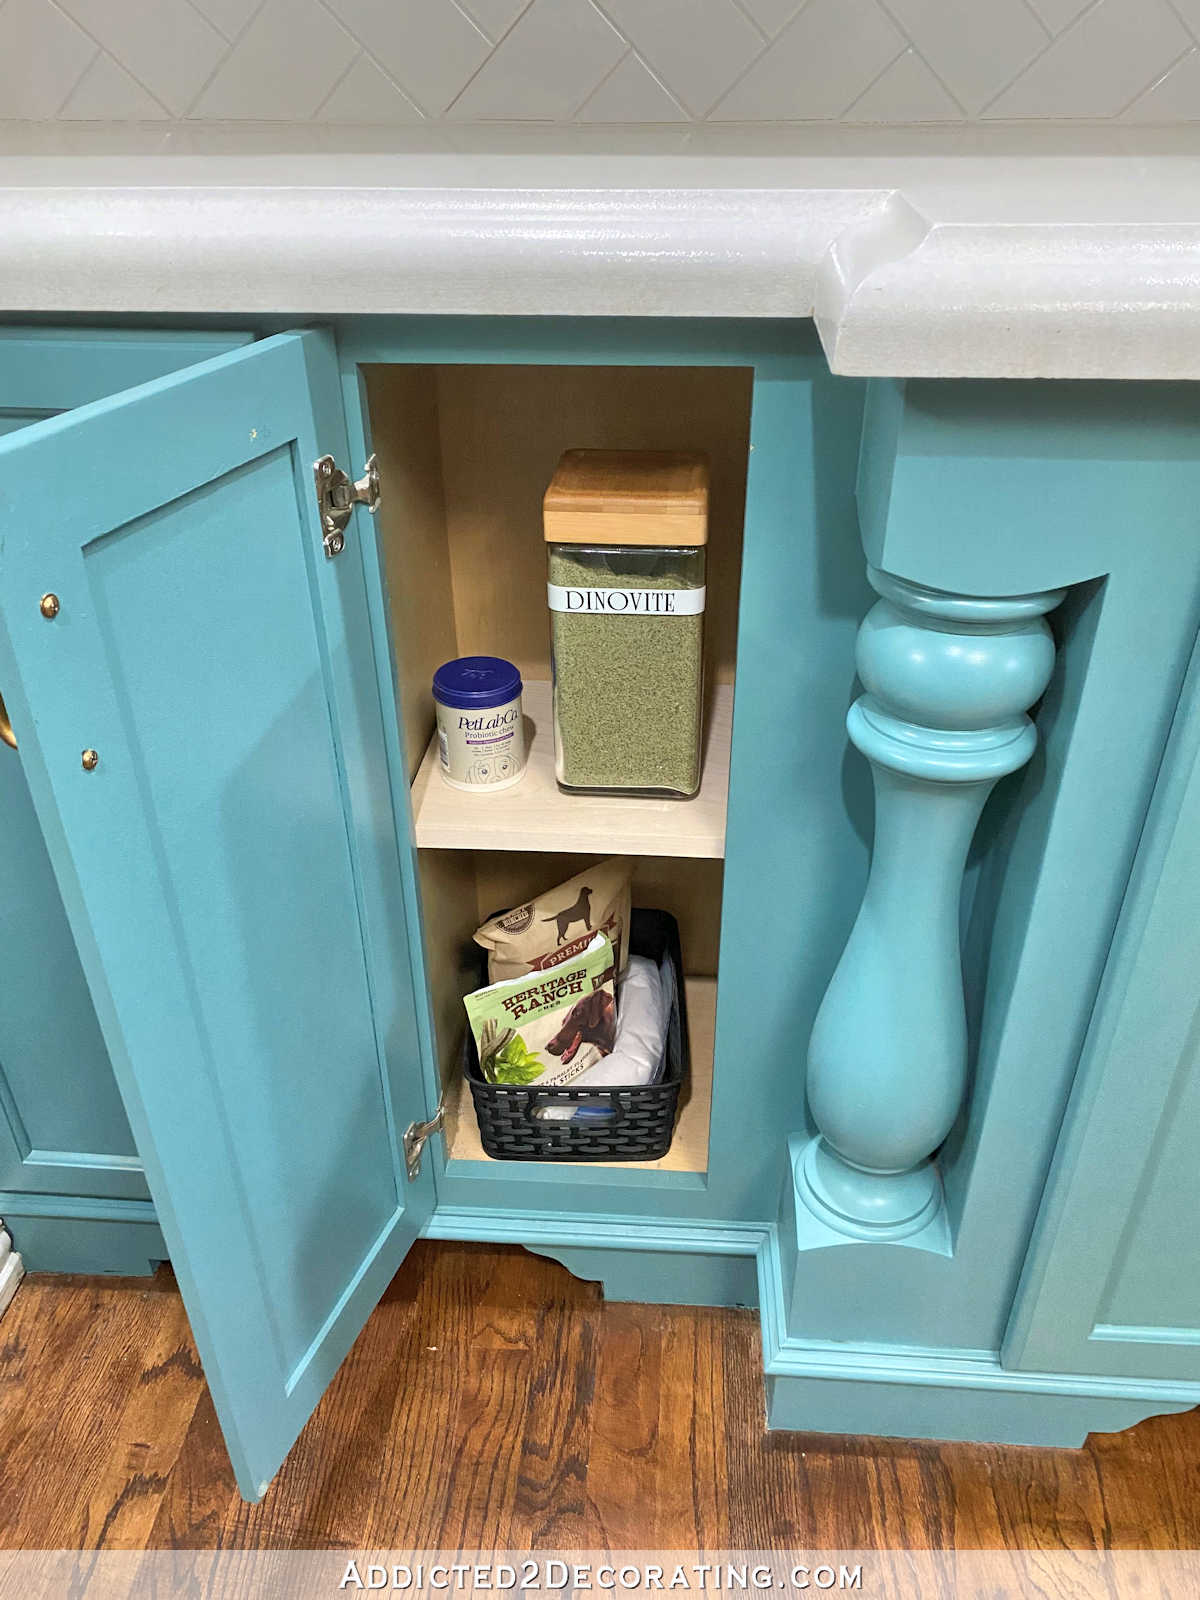 kitchen cabinet after organization - dog treats and food storage